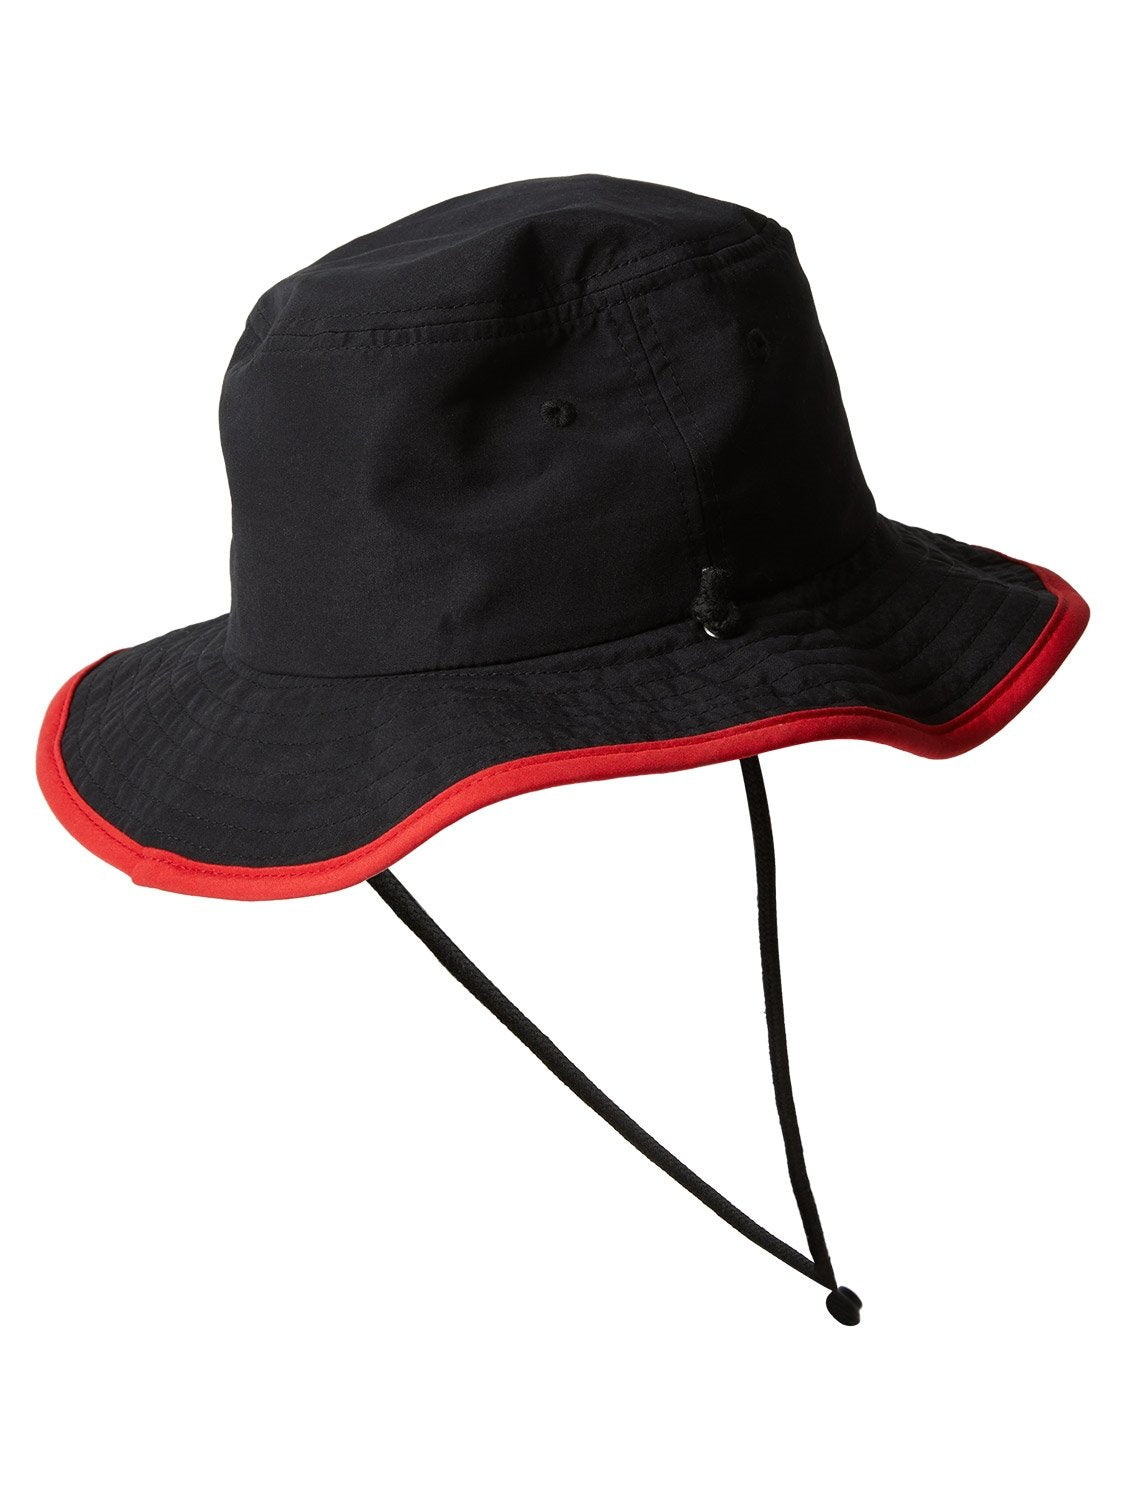 Quiksilver Boys Know It All Bucket Hat